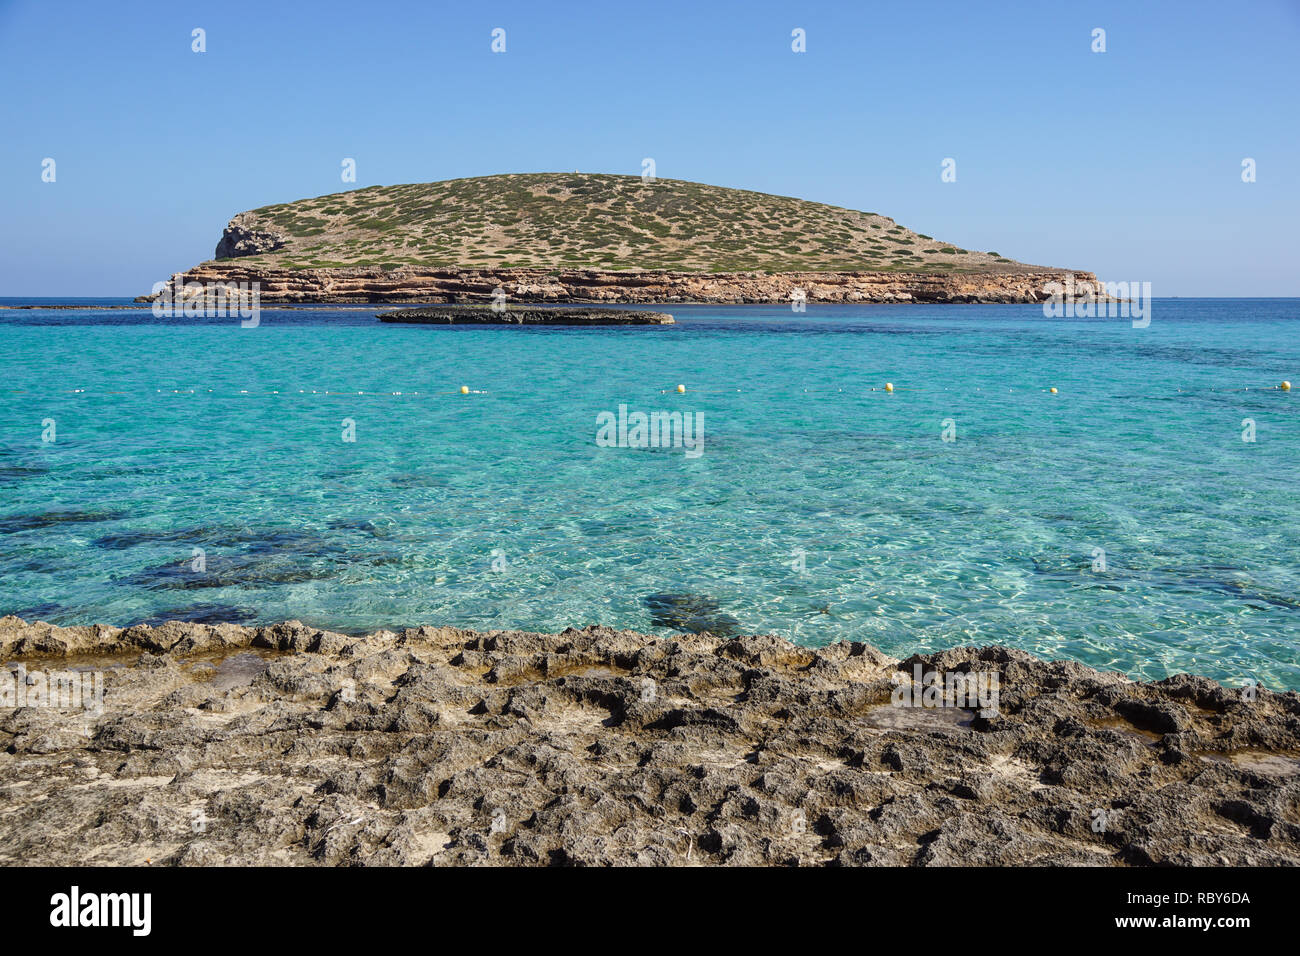 Beautiful sandy Cala Comte beach with azure blue sea water, Ibiza island, Spain Stock Photo